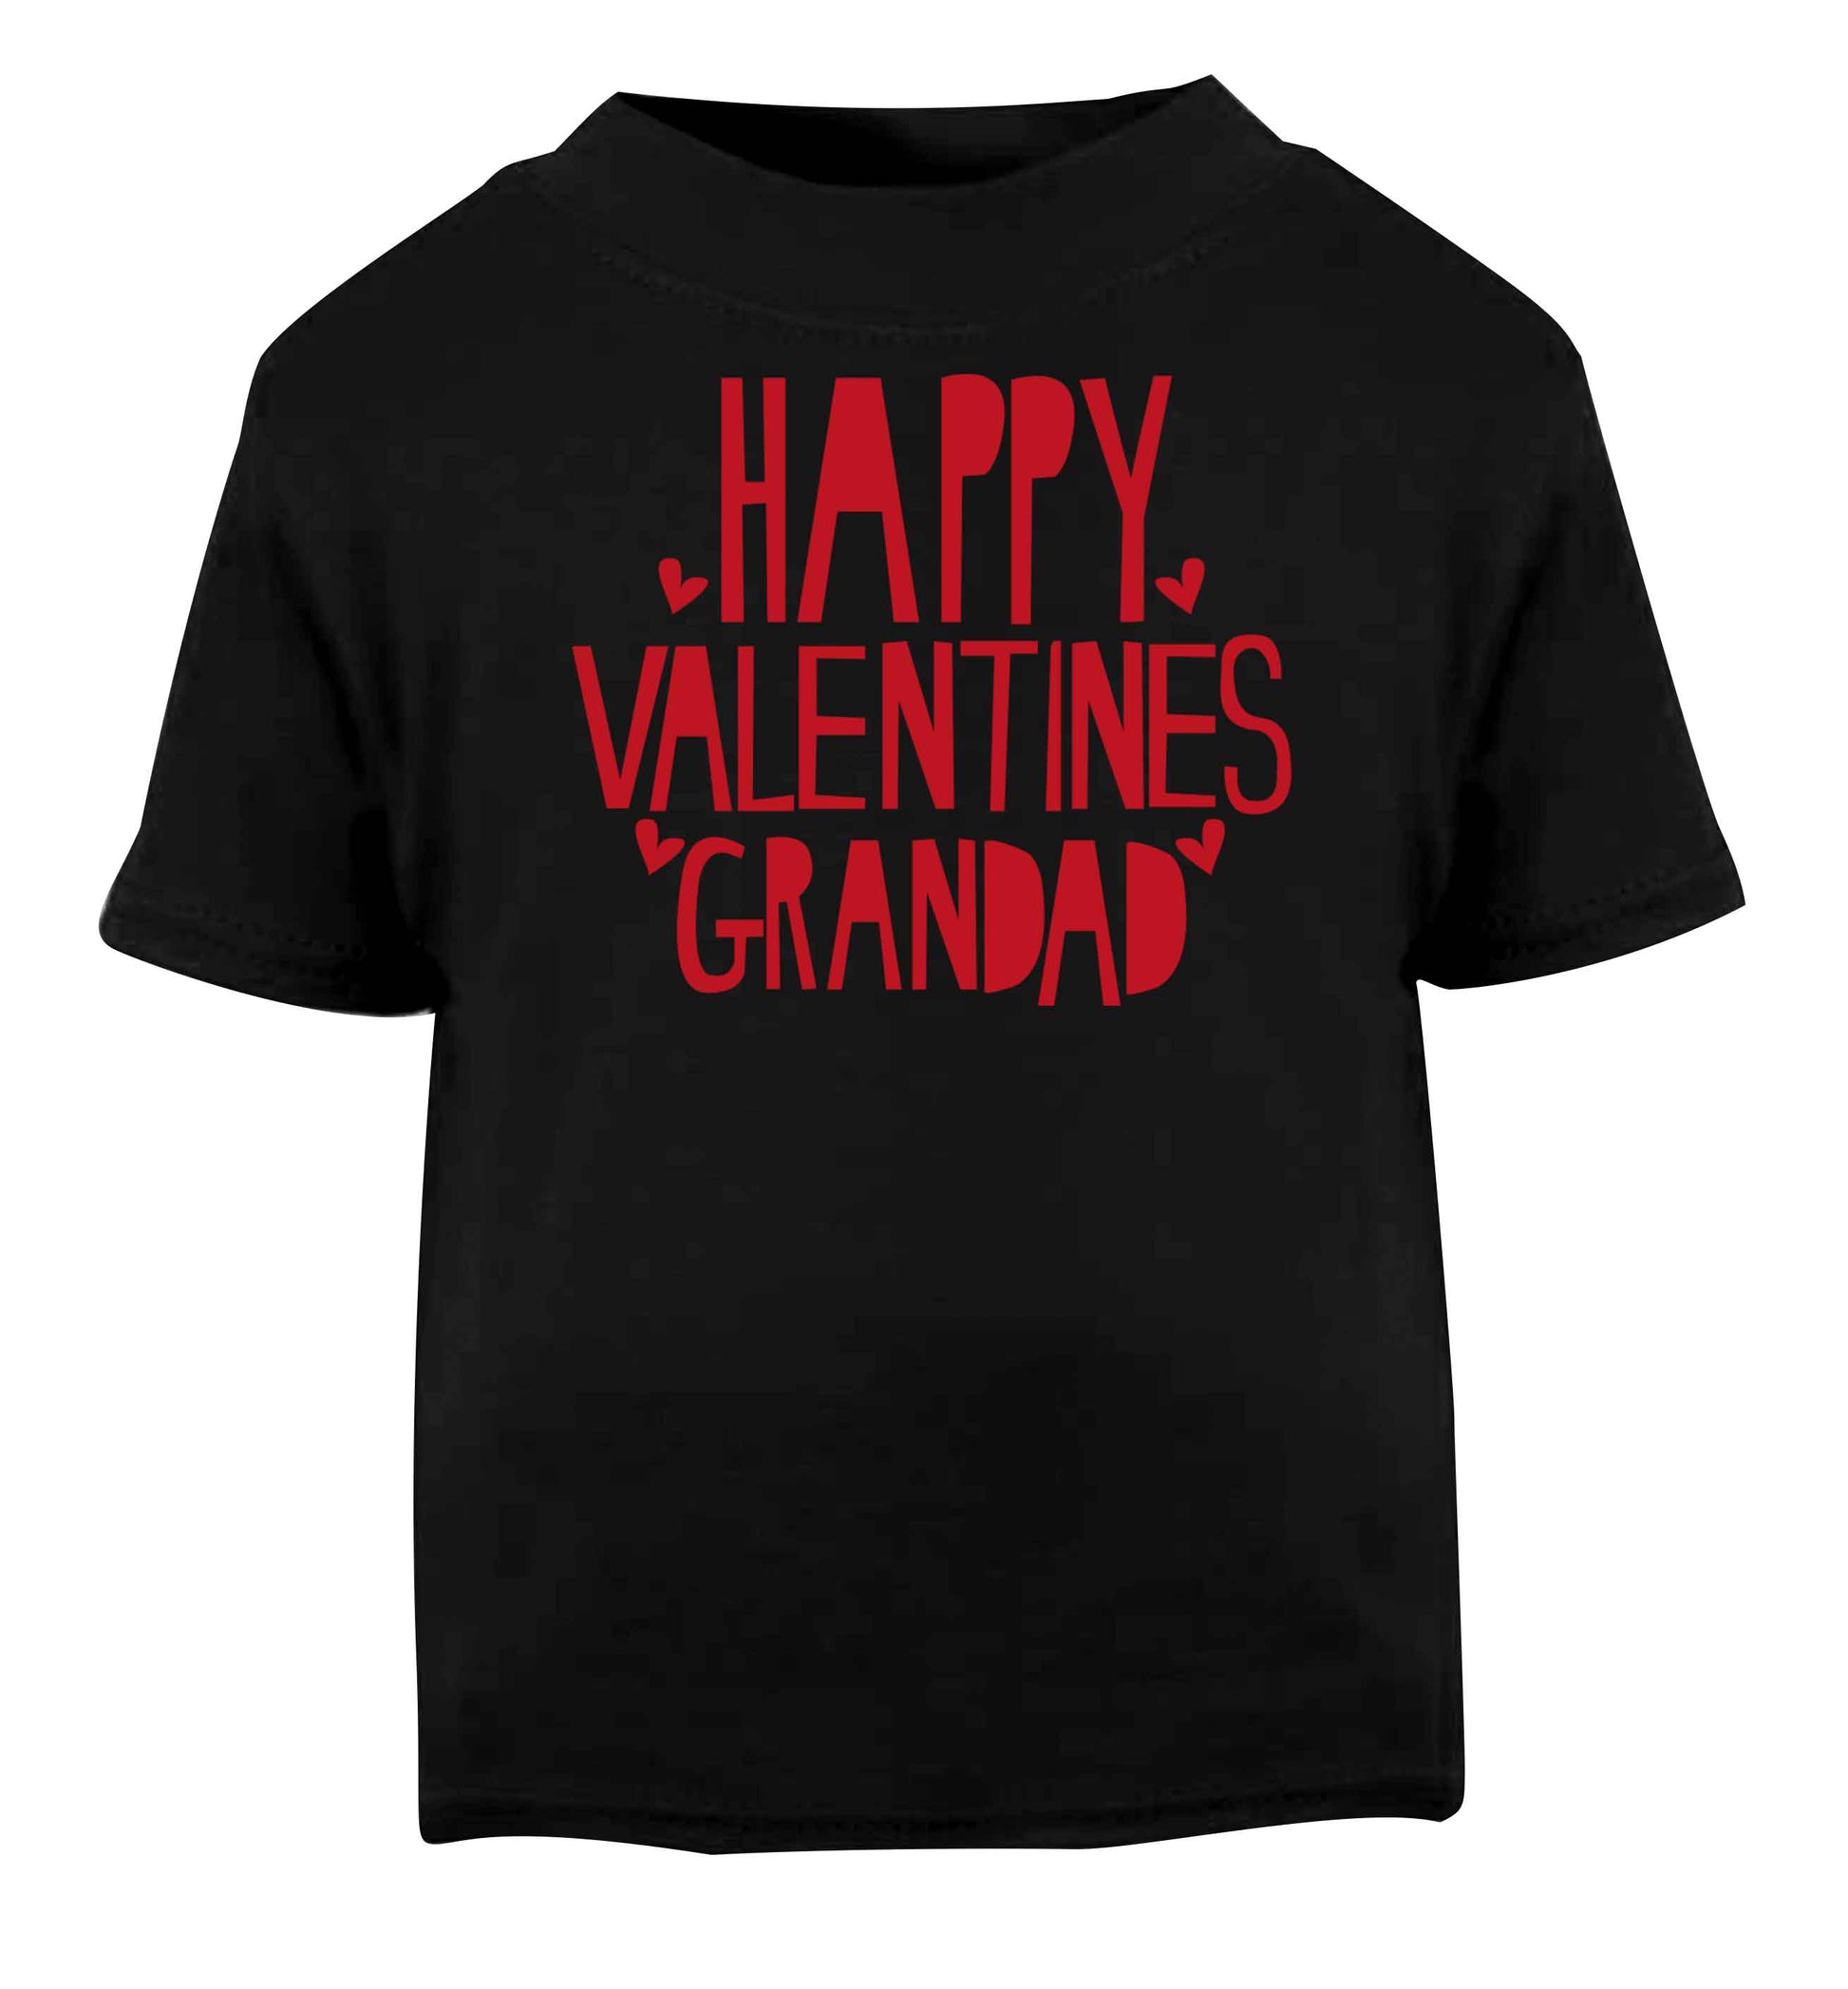 Happy valentines grandad Black baby toddler Tshirt 2 years